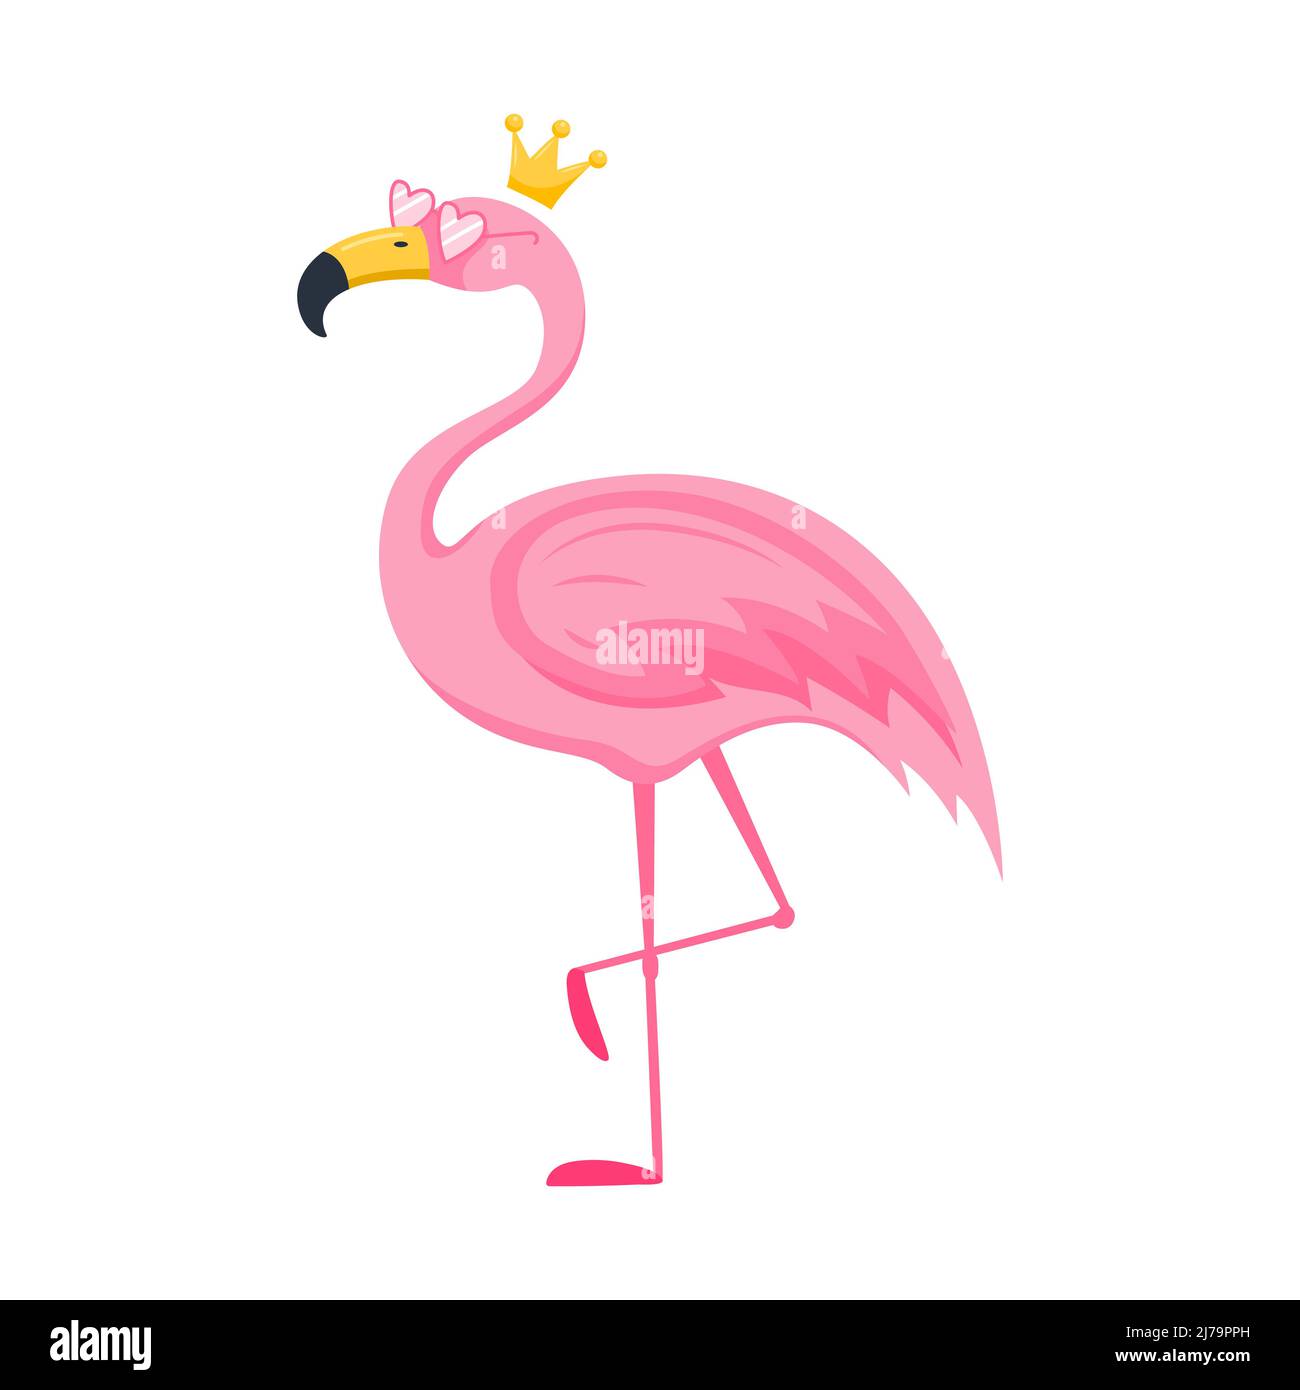 Cute Pink Flamingo | Photographic Print